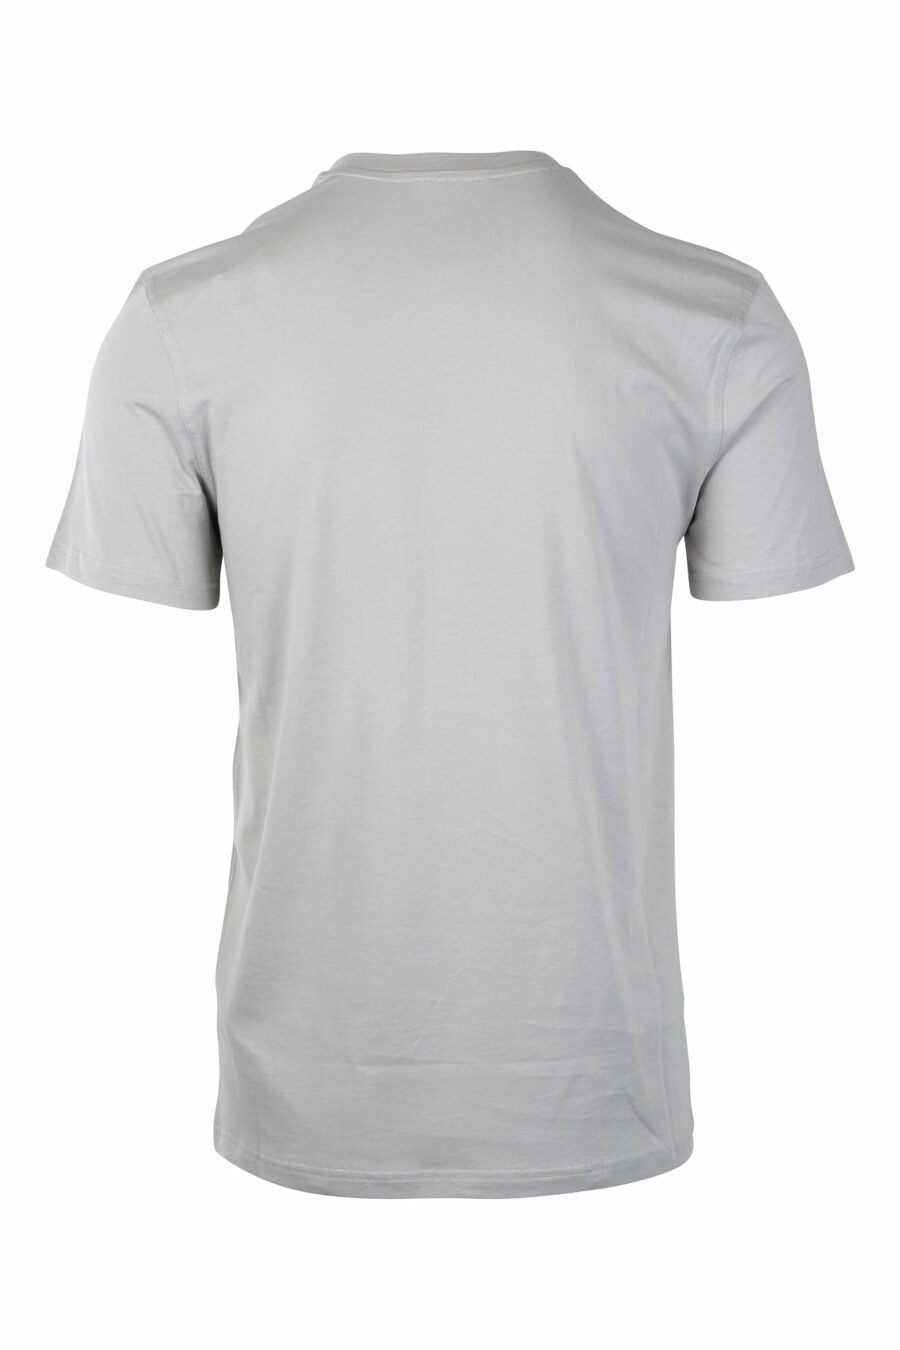 Graues T-Shirt mit monochromem Bären-Maxilogo - IMG 1399